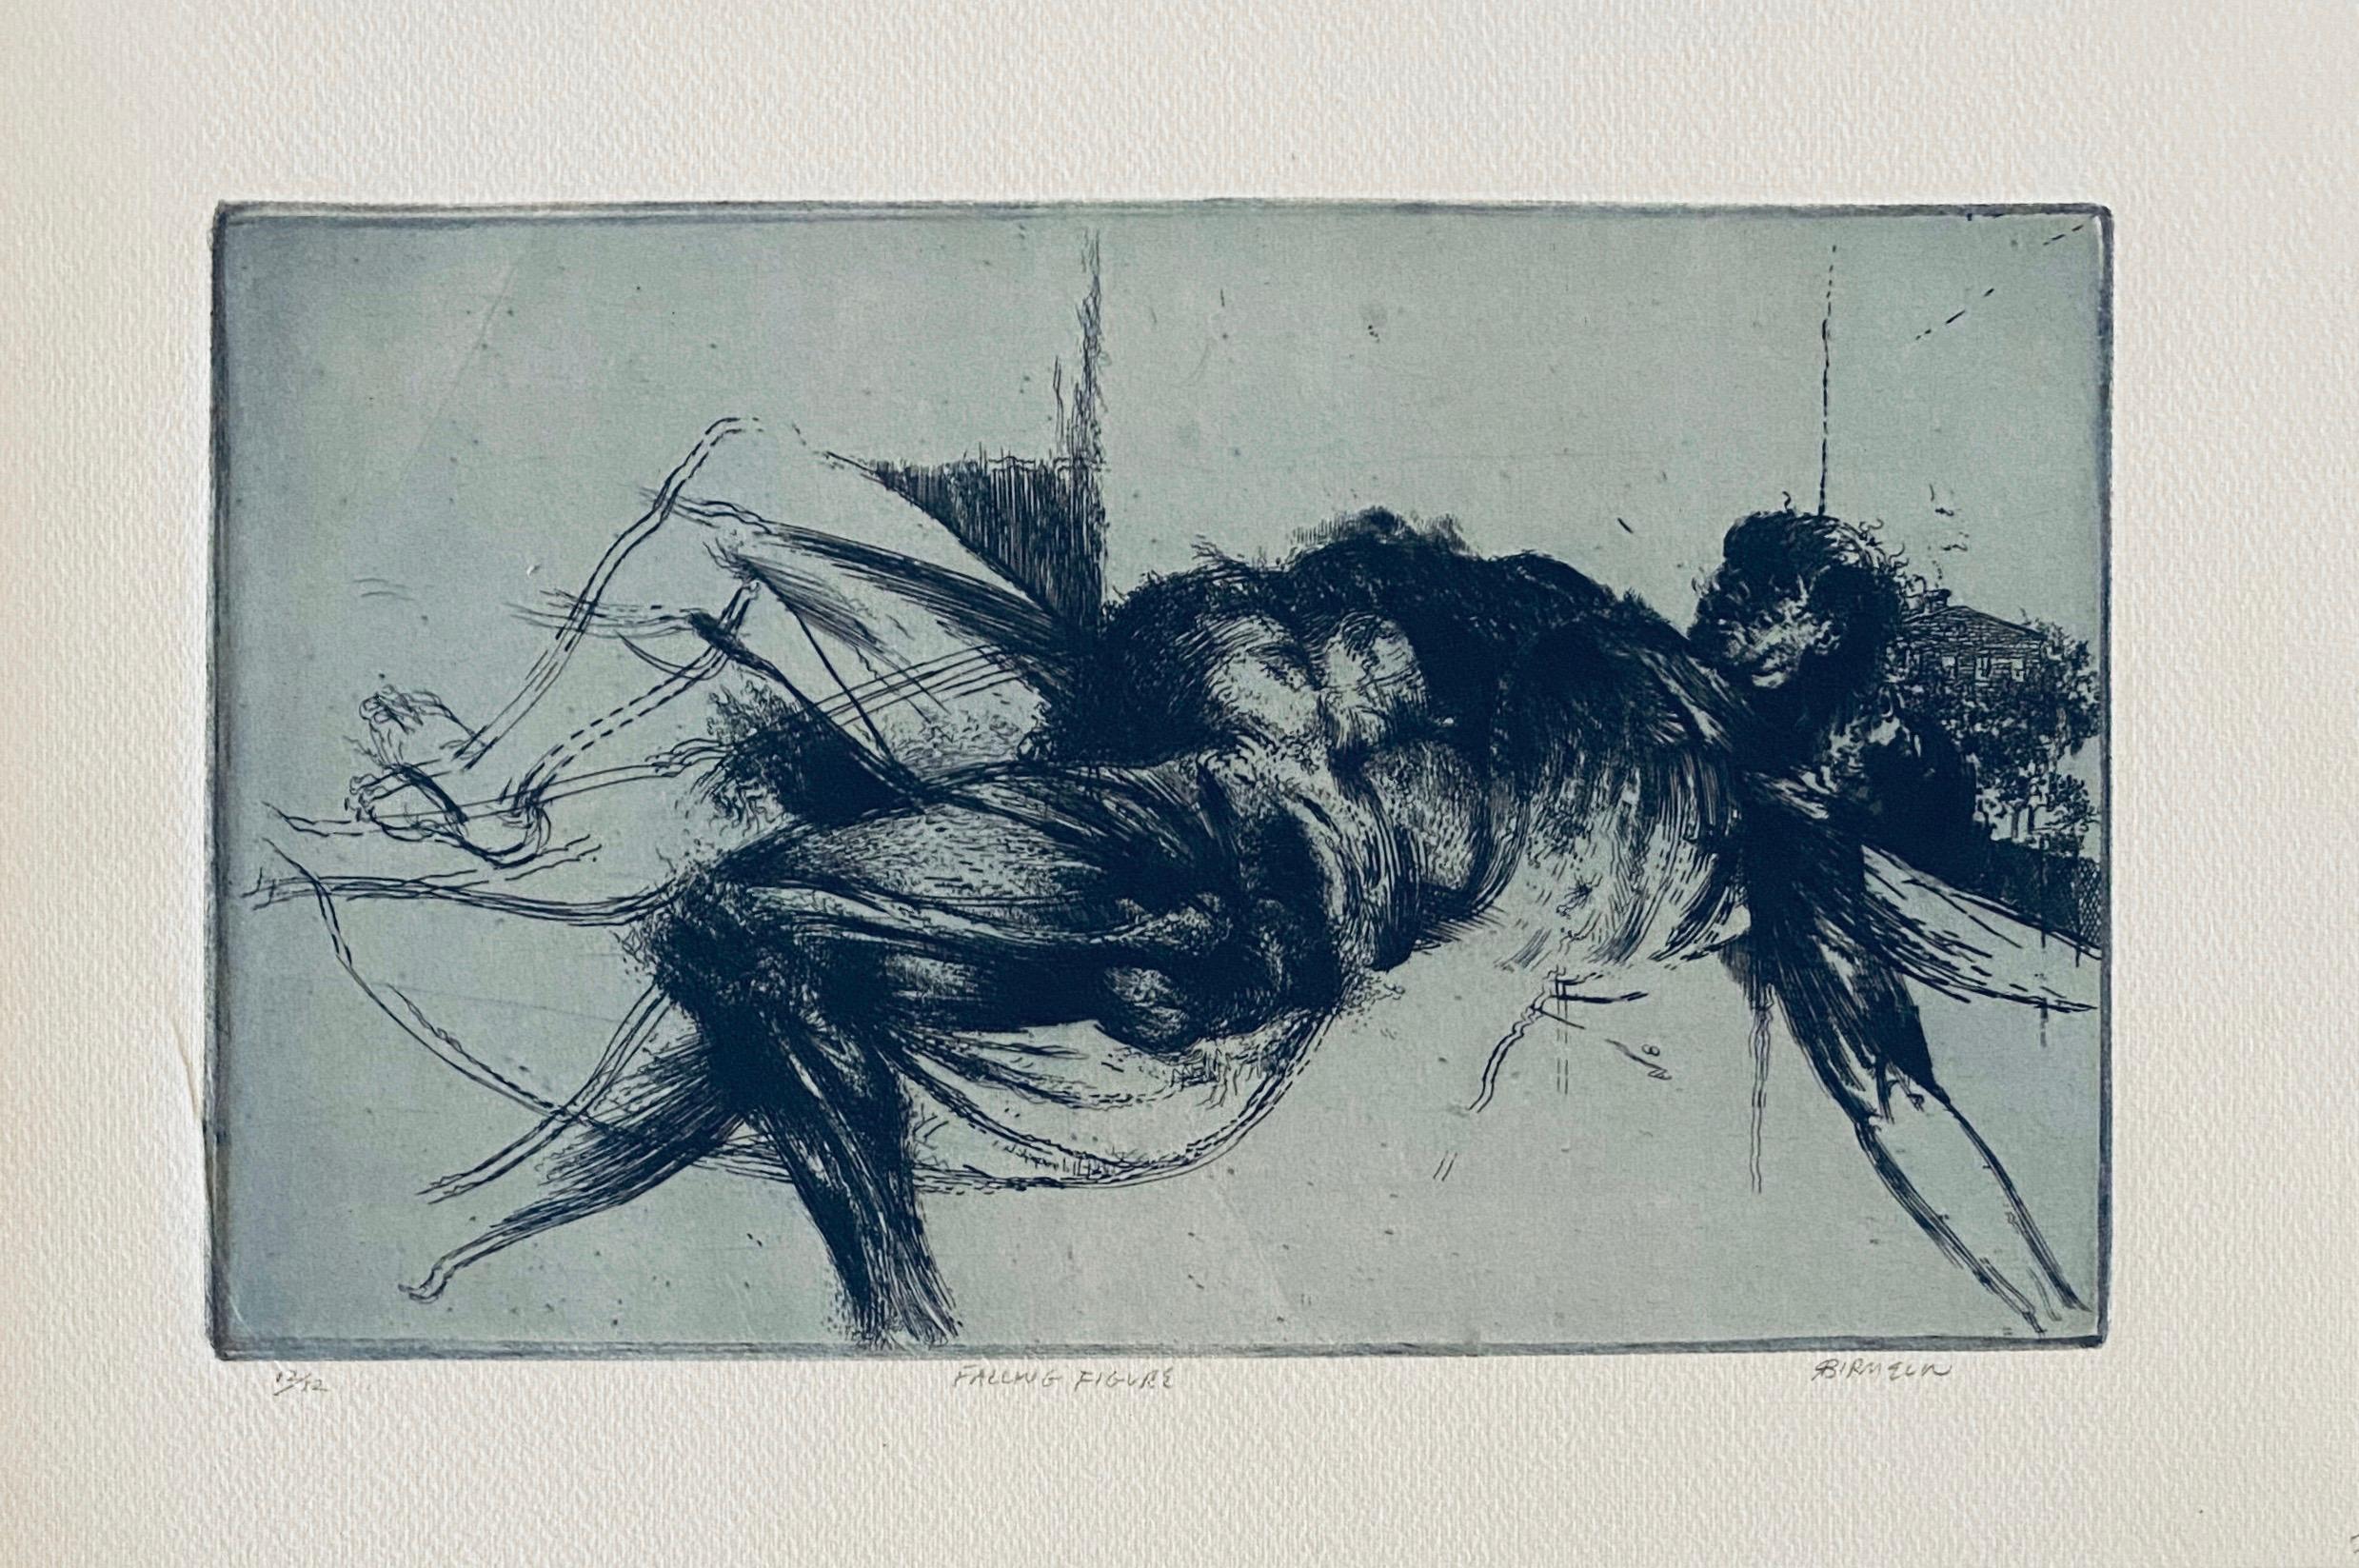 Robert A. Birmelin Interior Print - Falling Figure, American Modernist Abstract Etching